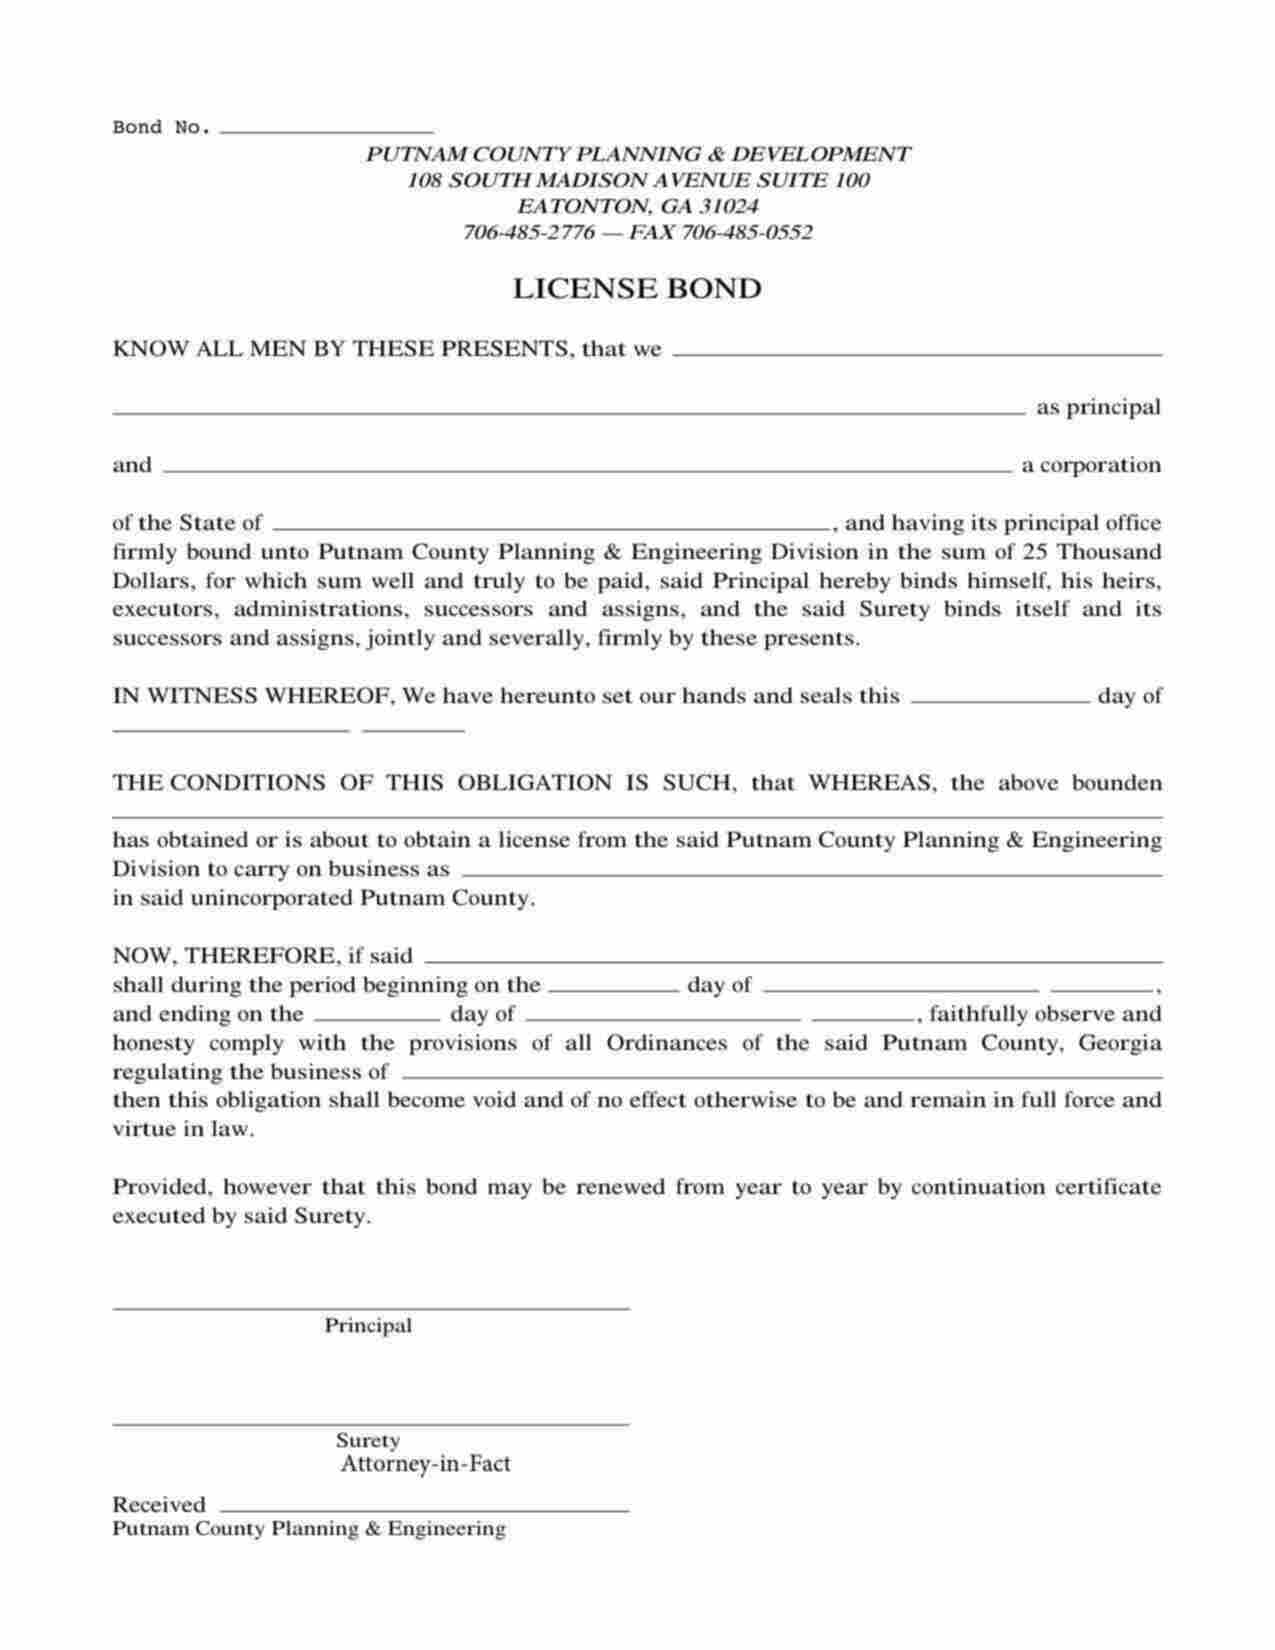 Georgia Contractor's License Bond Form